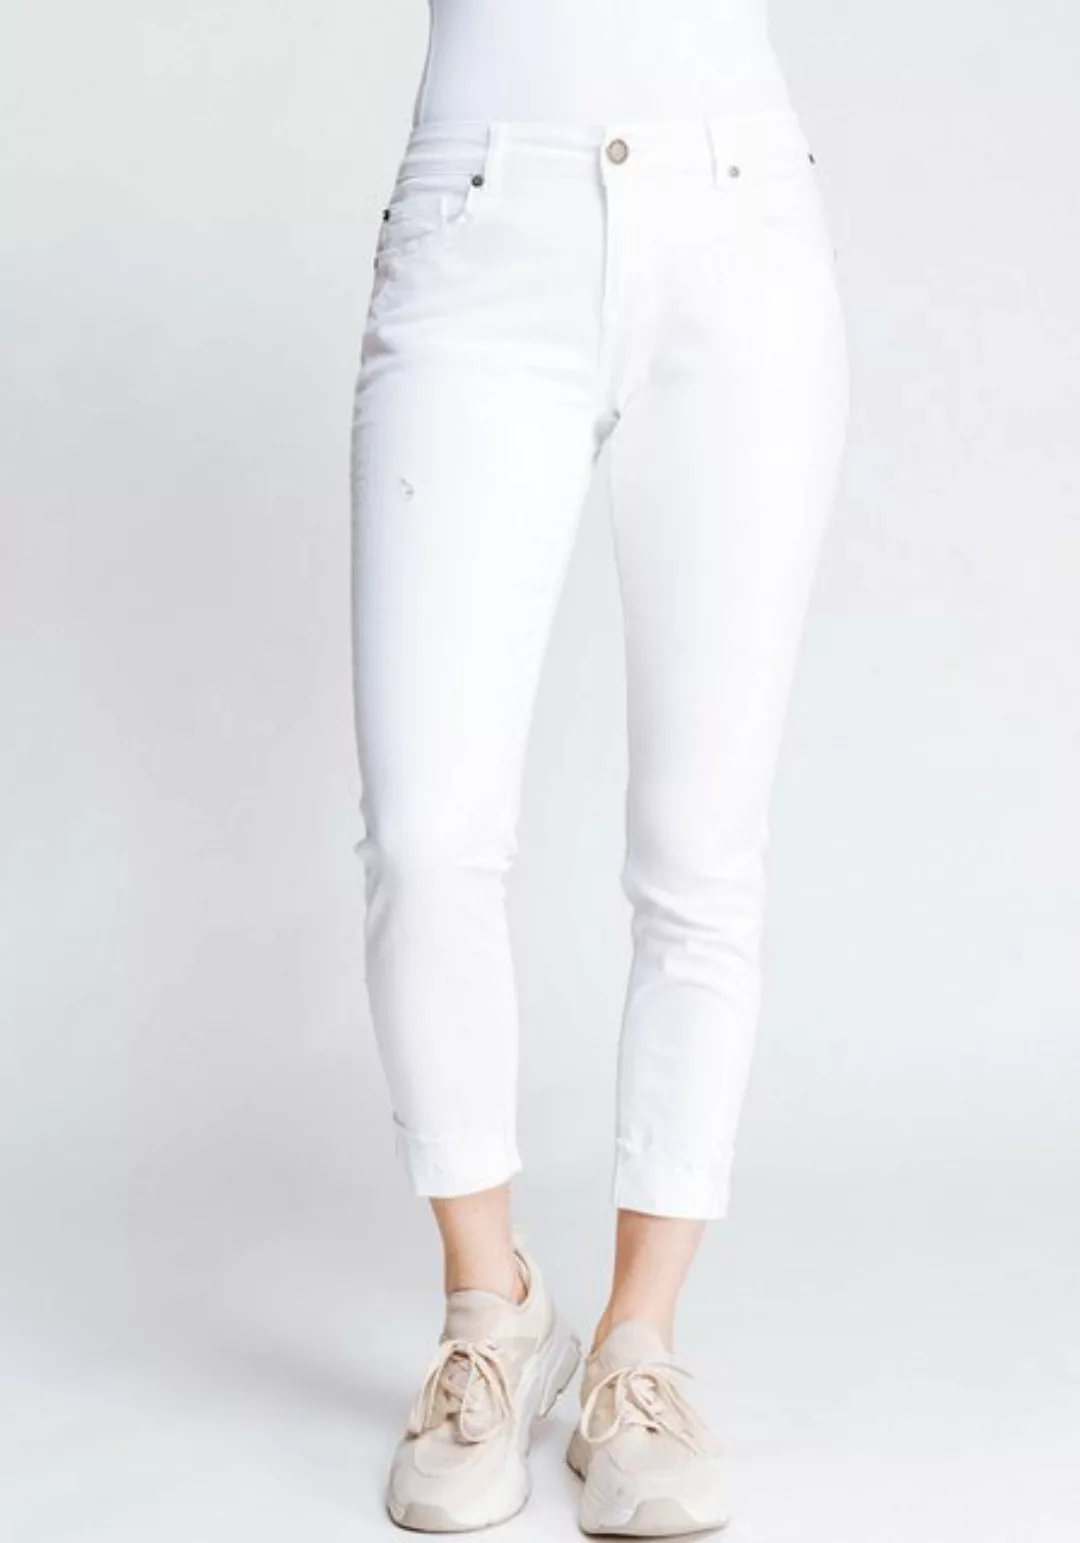 Zhrill Regular-fit-Jeans NOVA im 5-Poket-Style günstig online kaufen